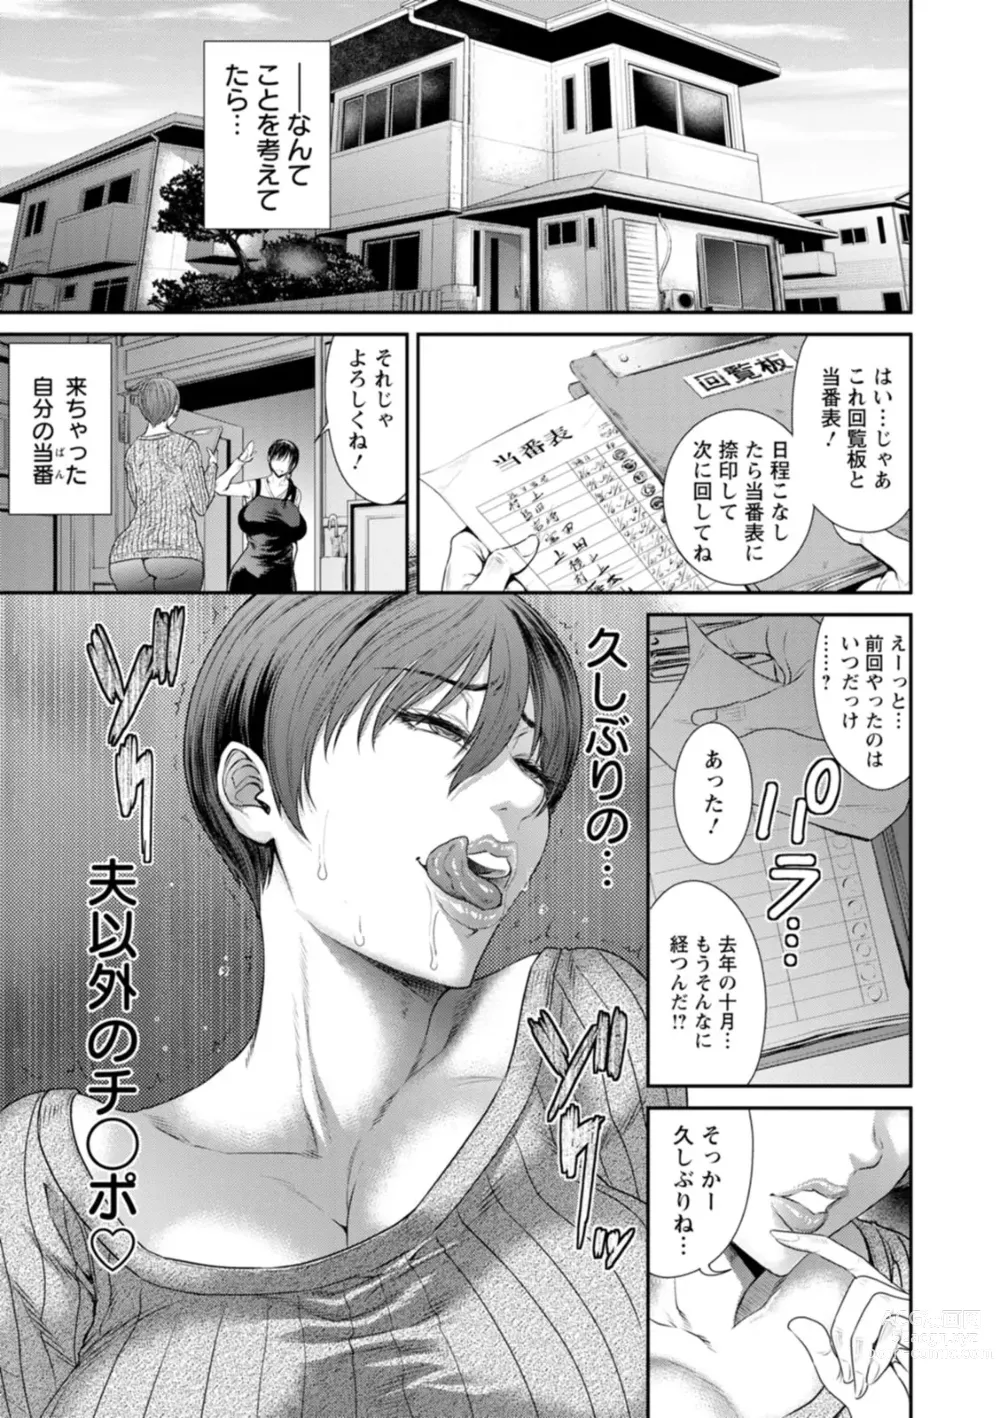 Page 9 of manga Obscene Box